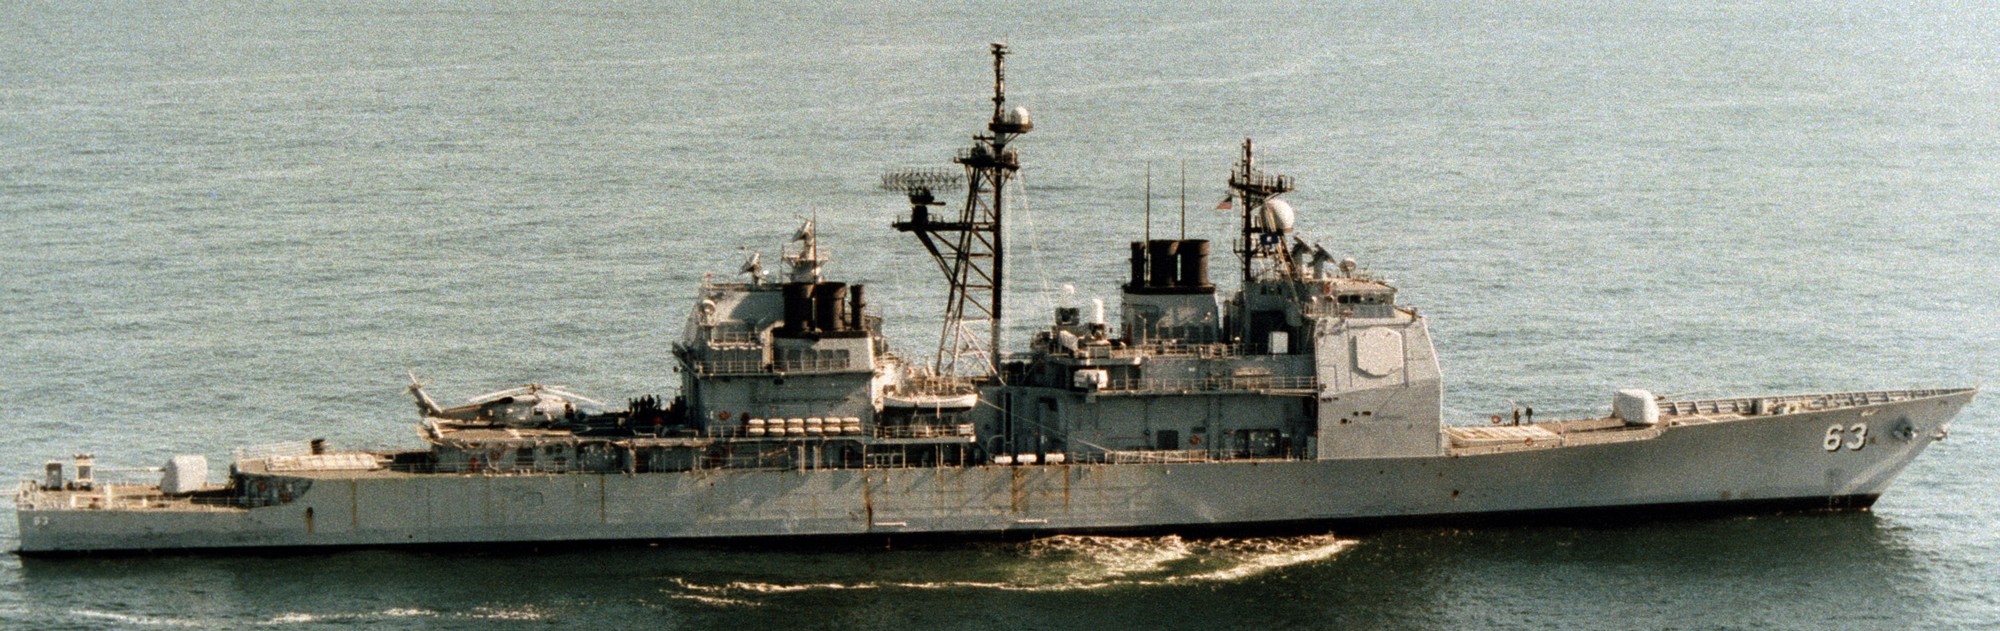 cg-63 uss cowpens ticonderoga class guided missile cruiser aegis us navy sea trials 86